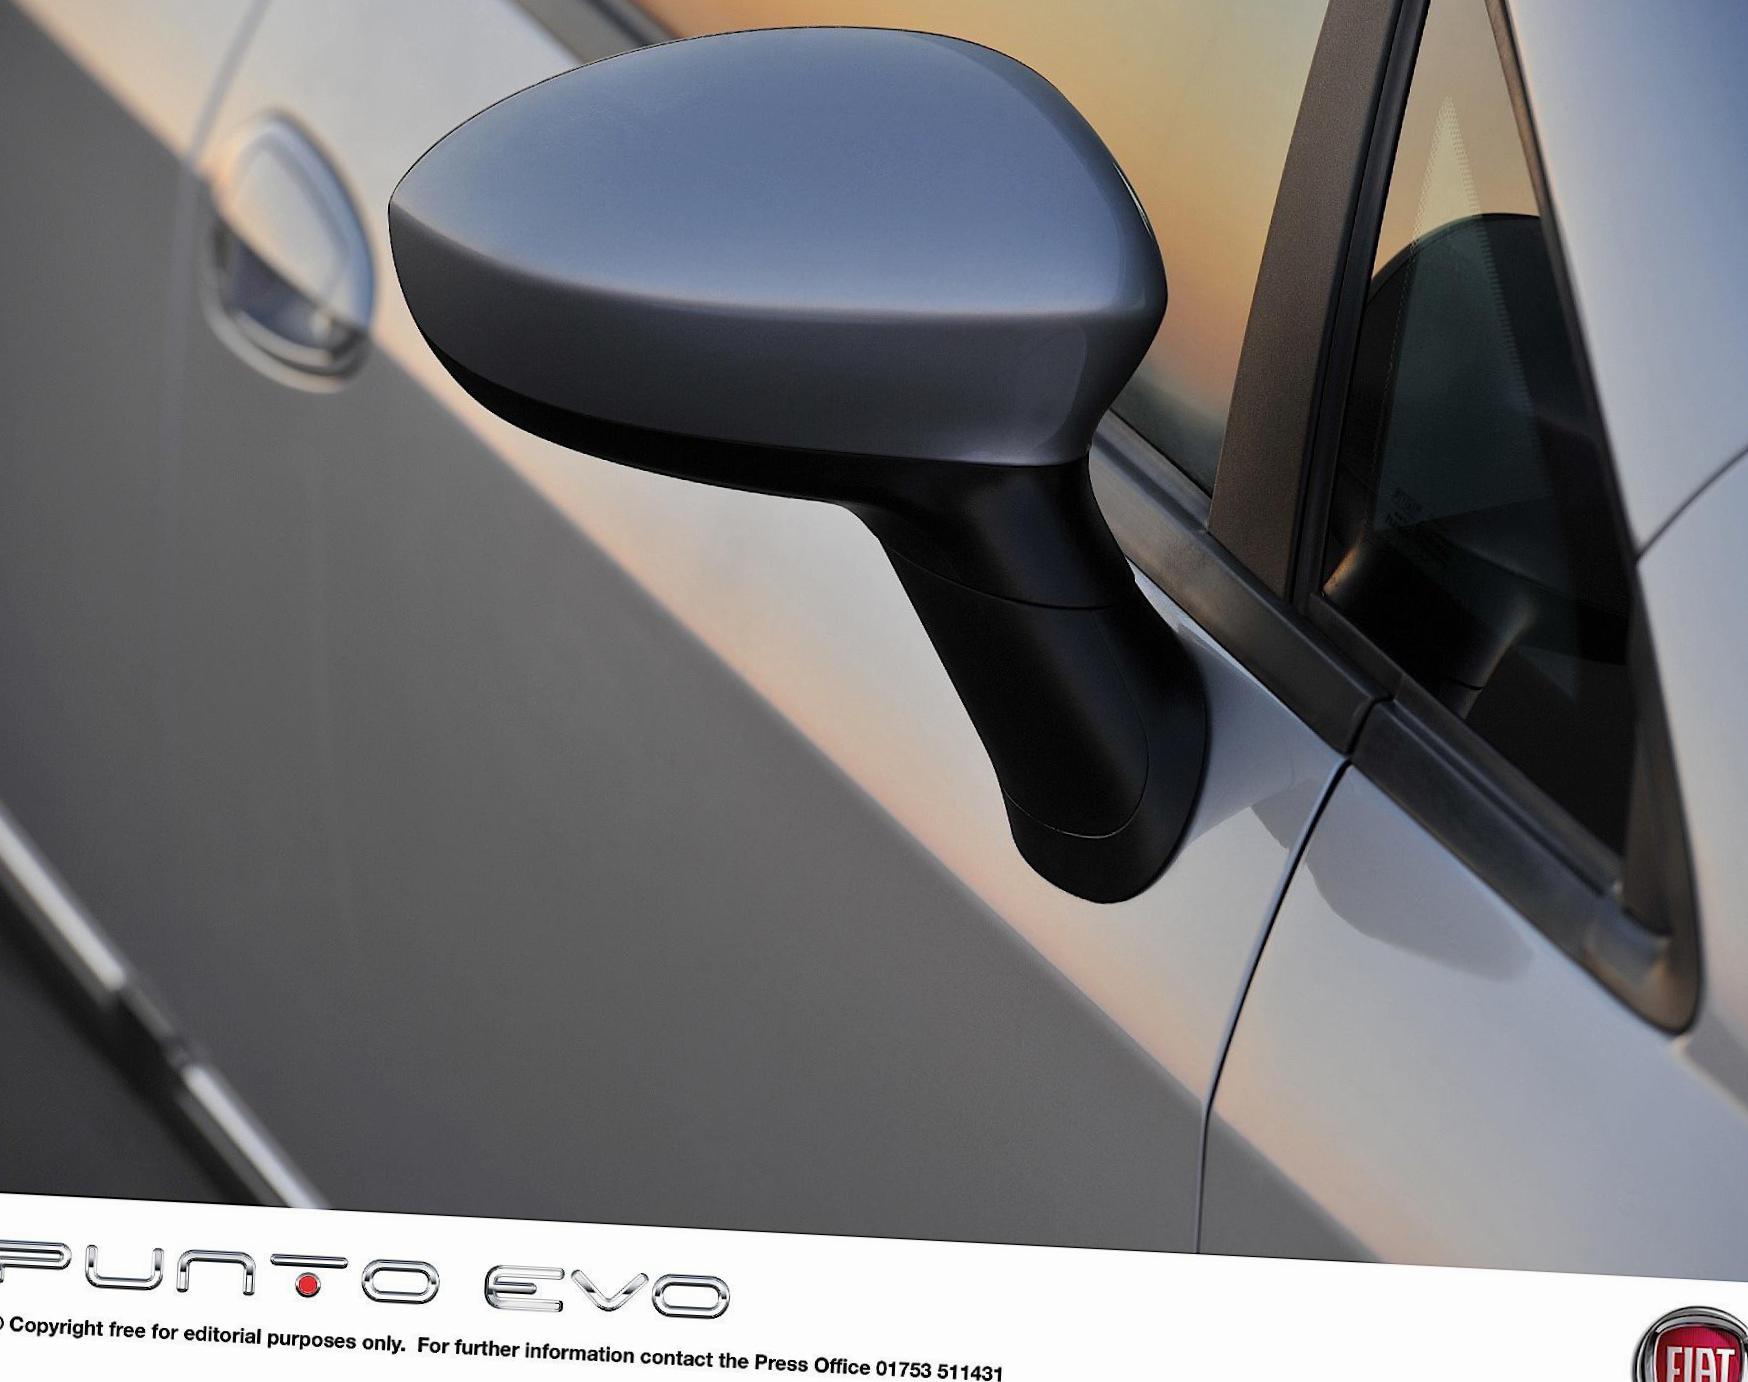 Fiat Punto Evo 5 doors reviews 2012